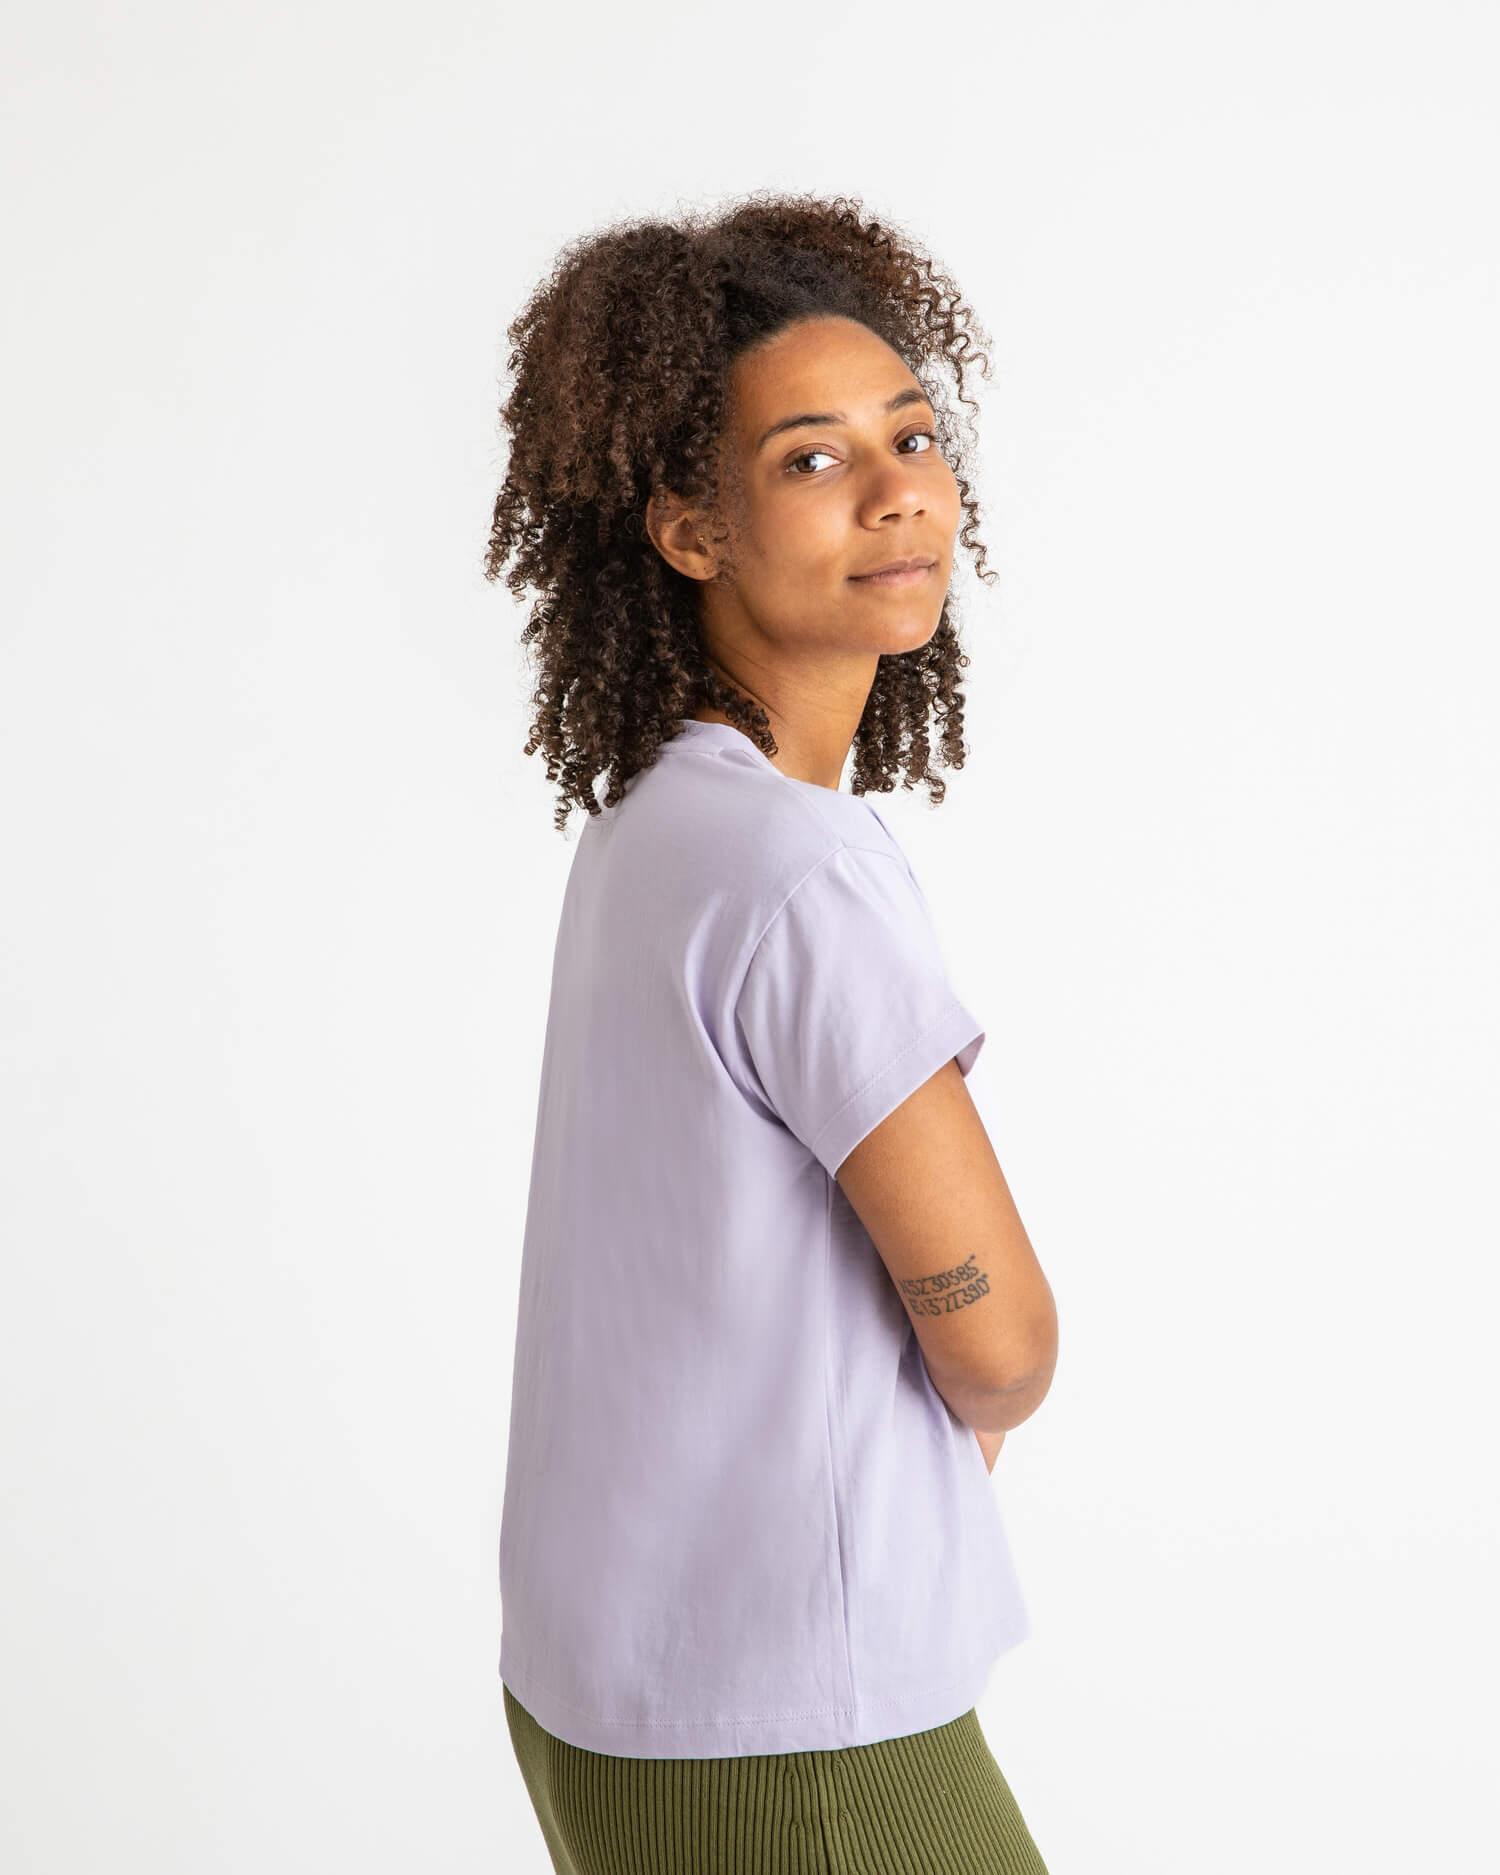 T-shirt violet essentiel en coton 100% biologique de Matona